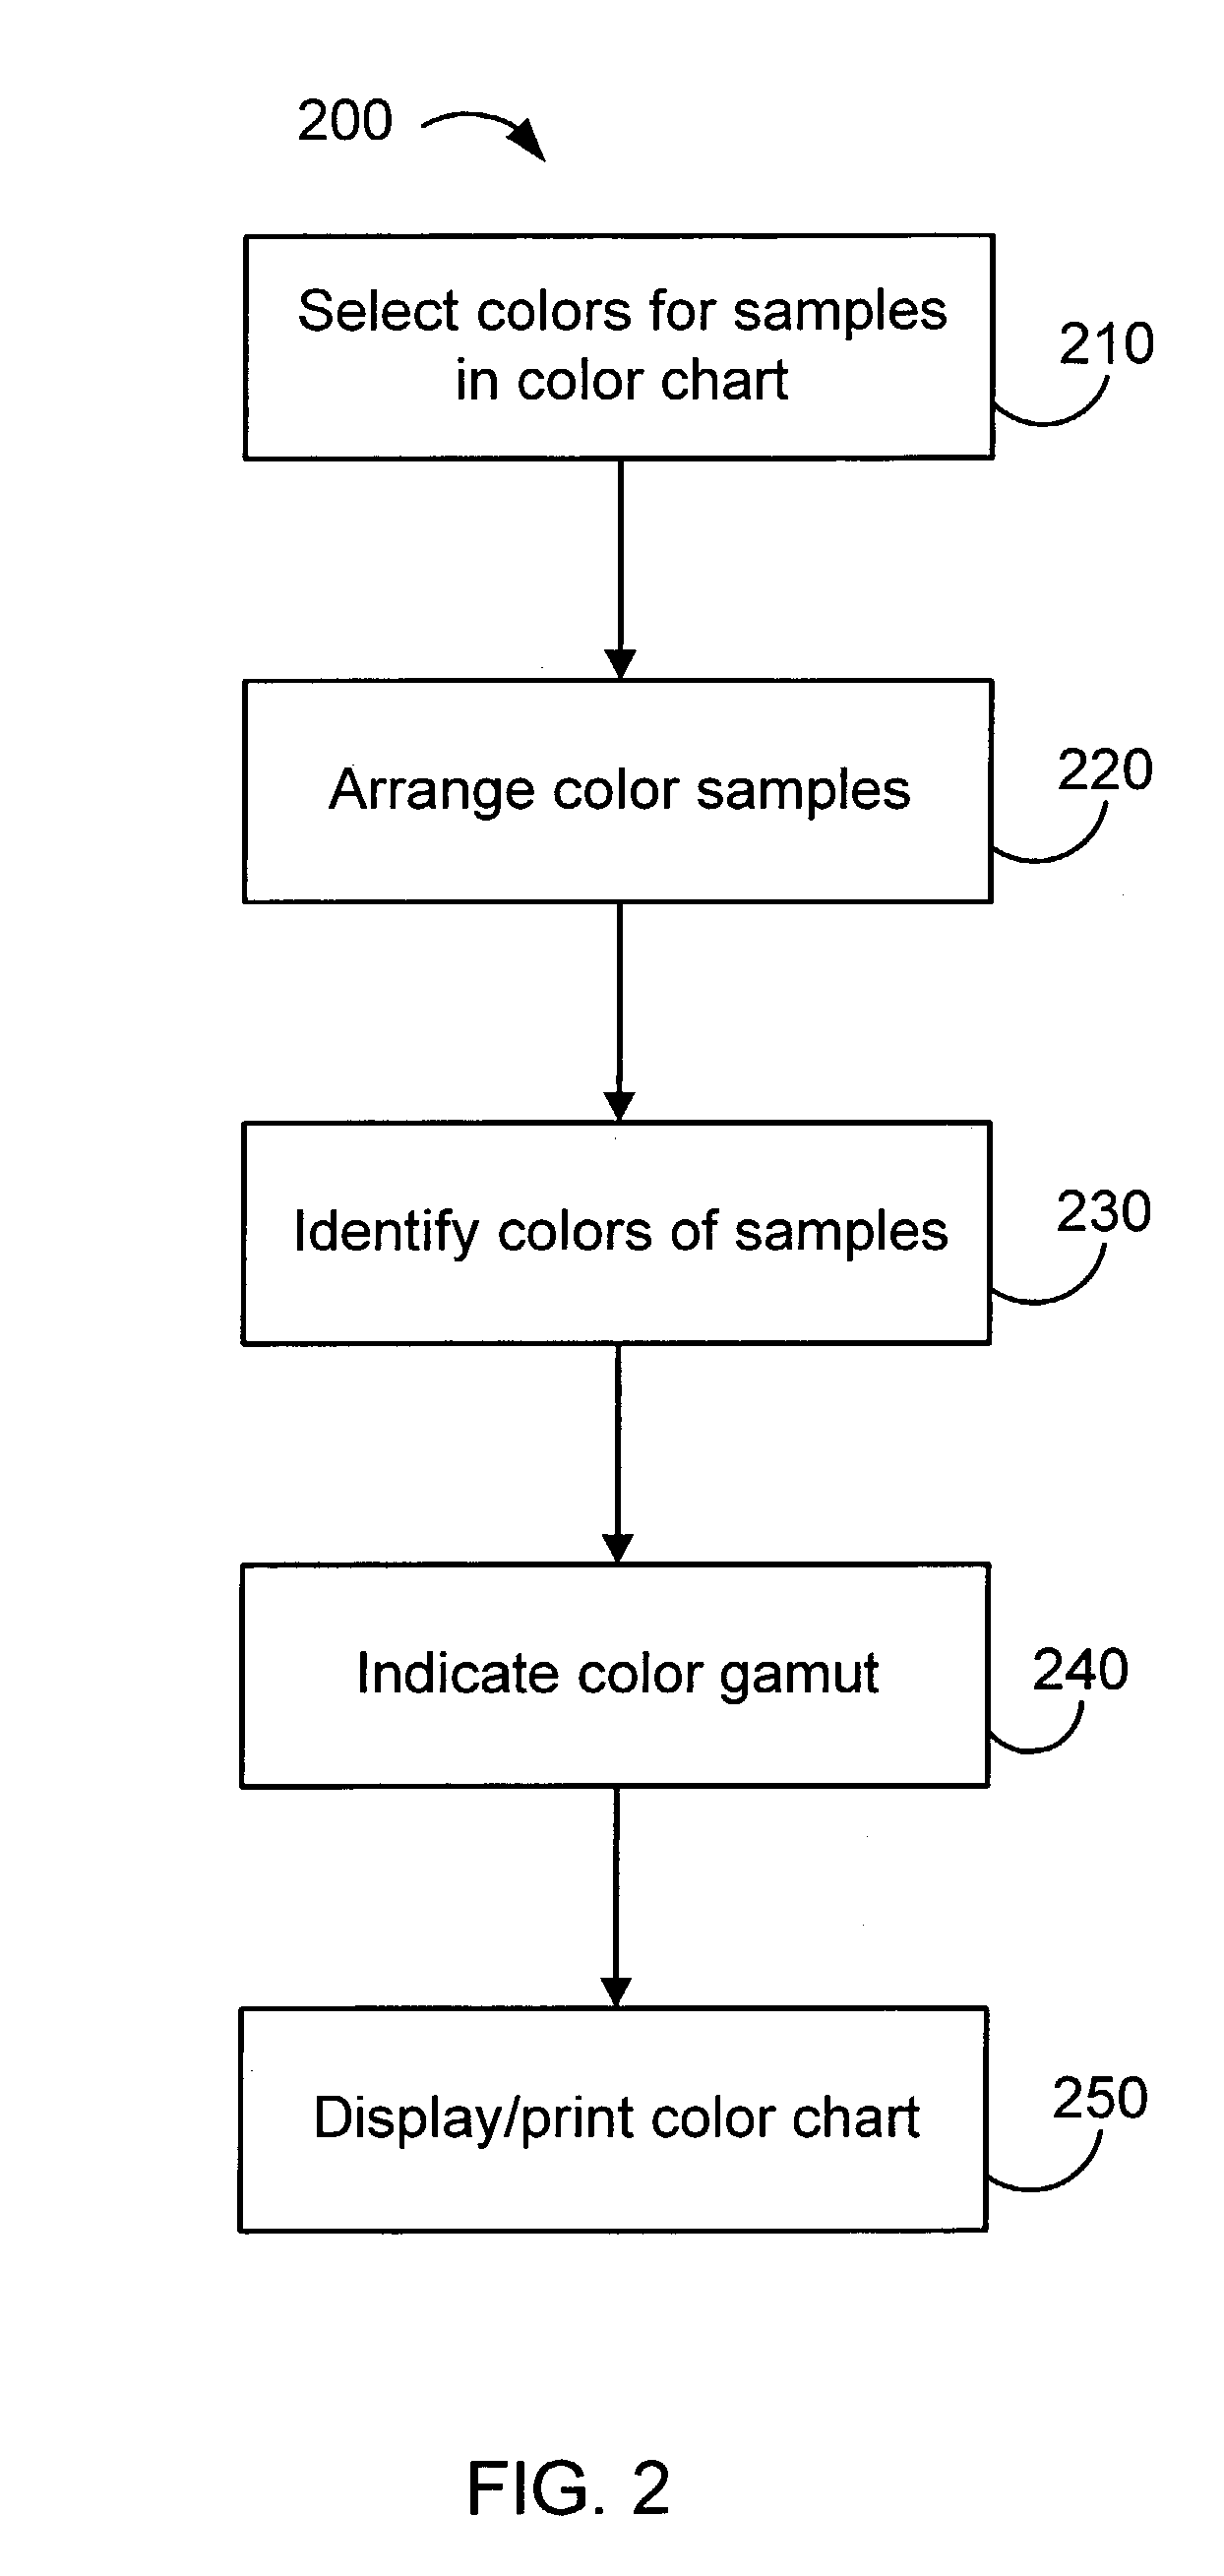 Representing color gamuts in color charts